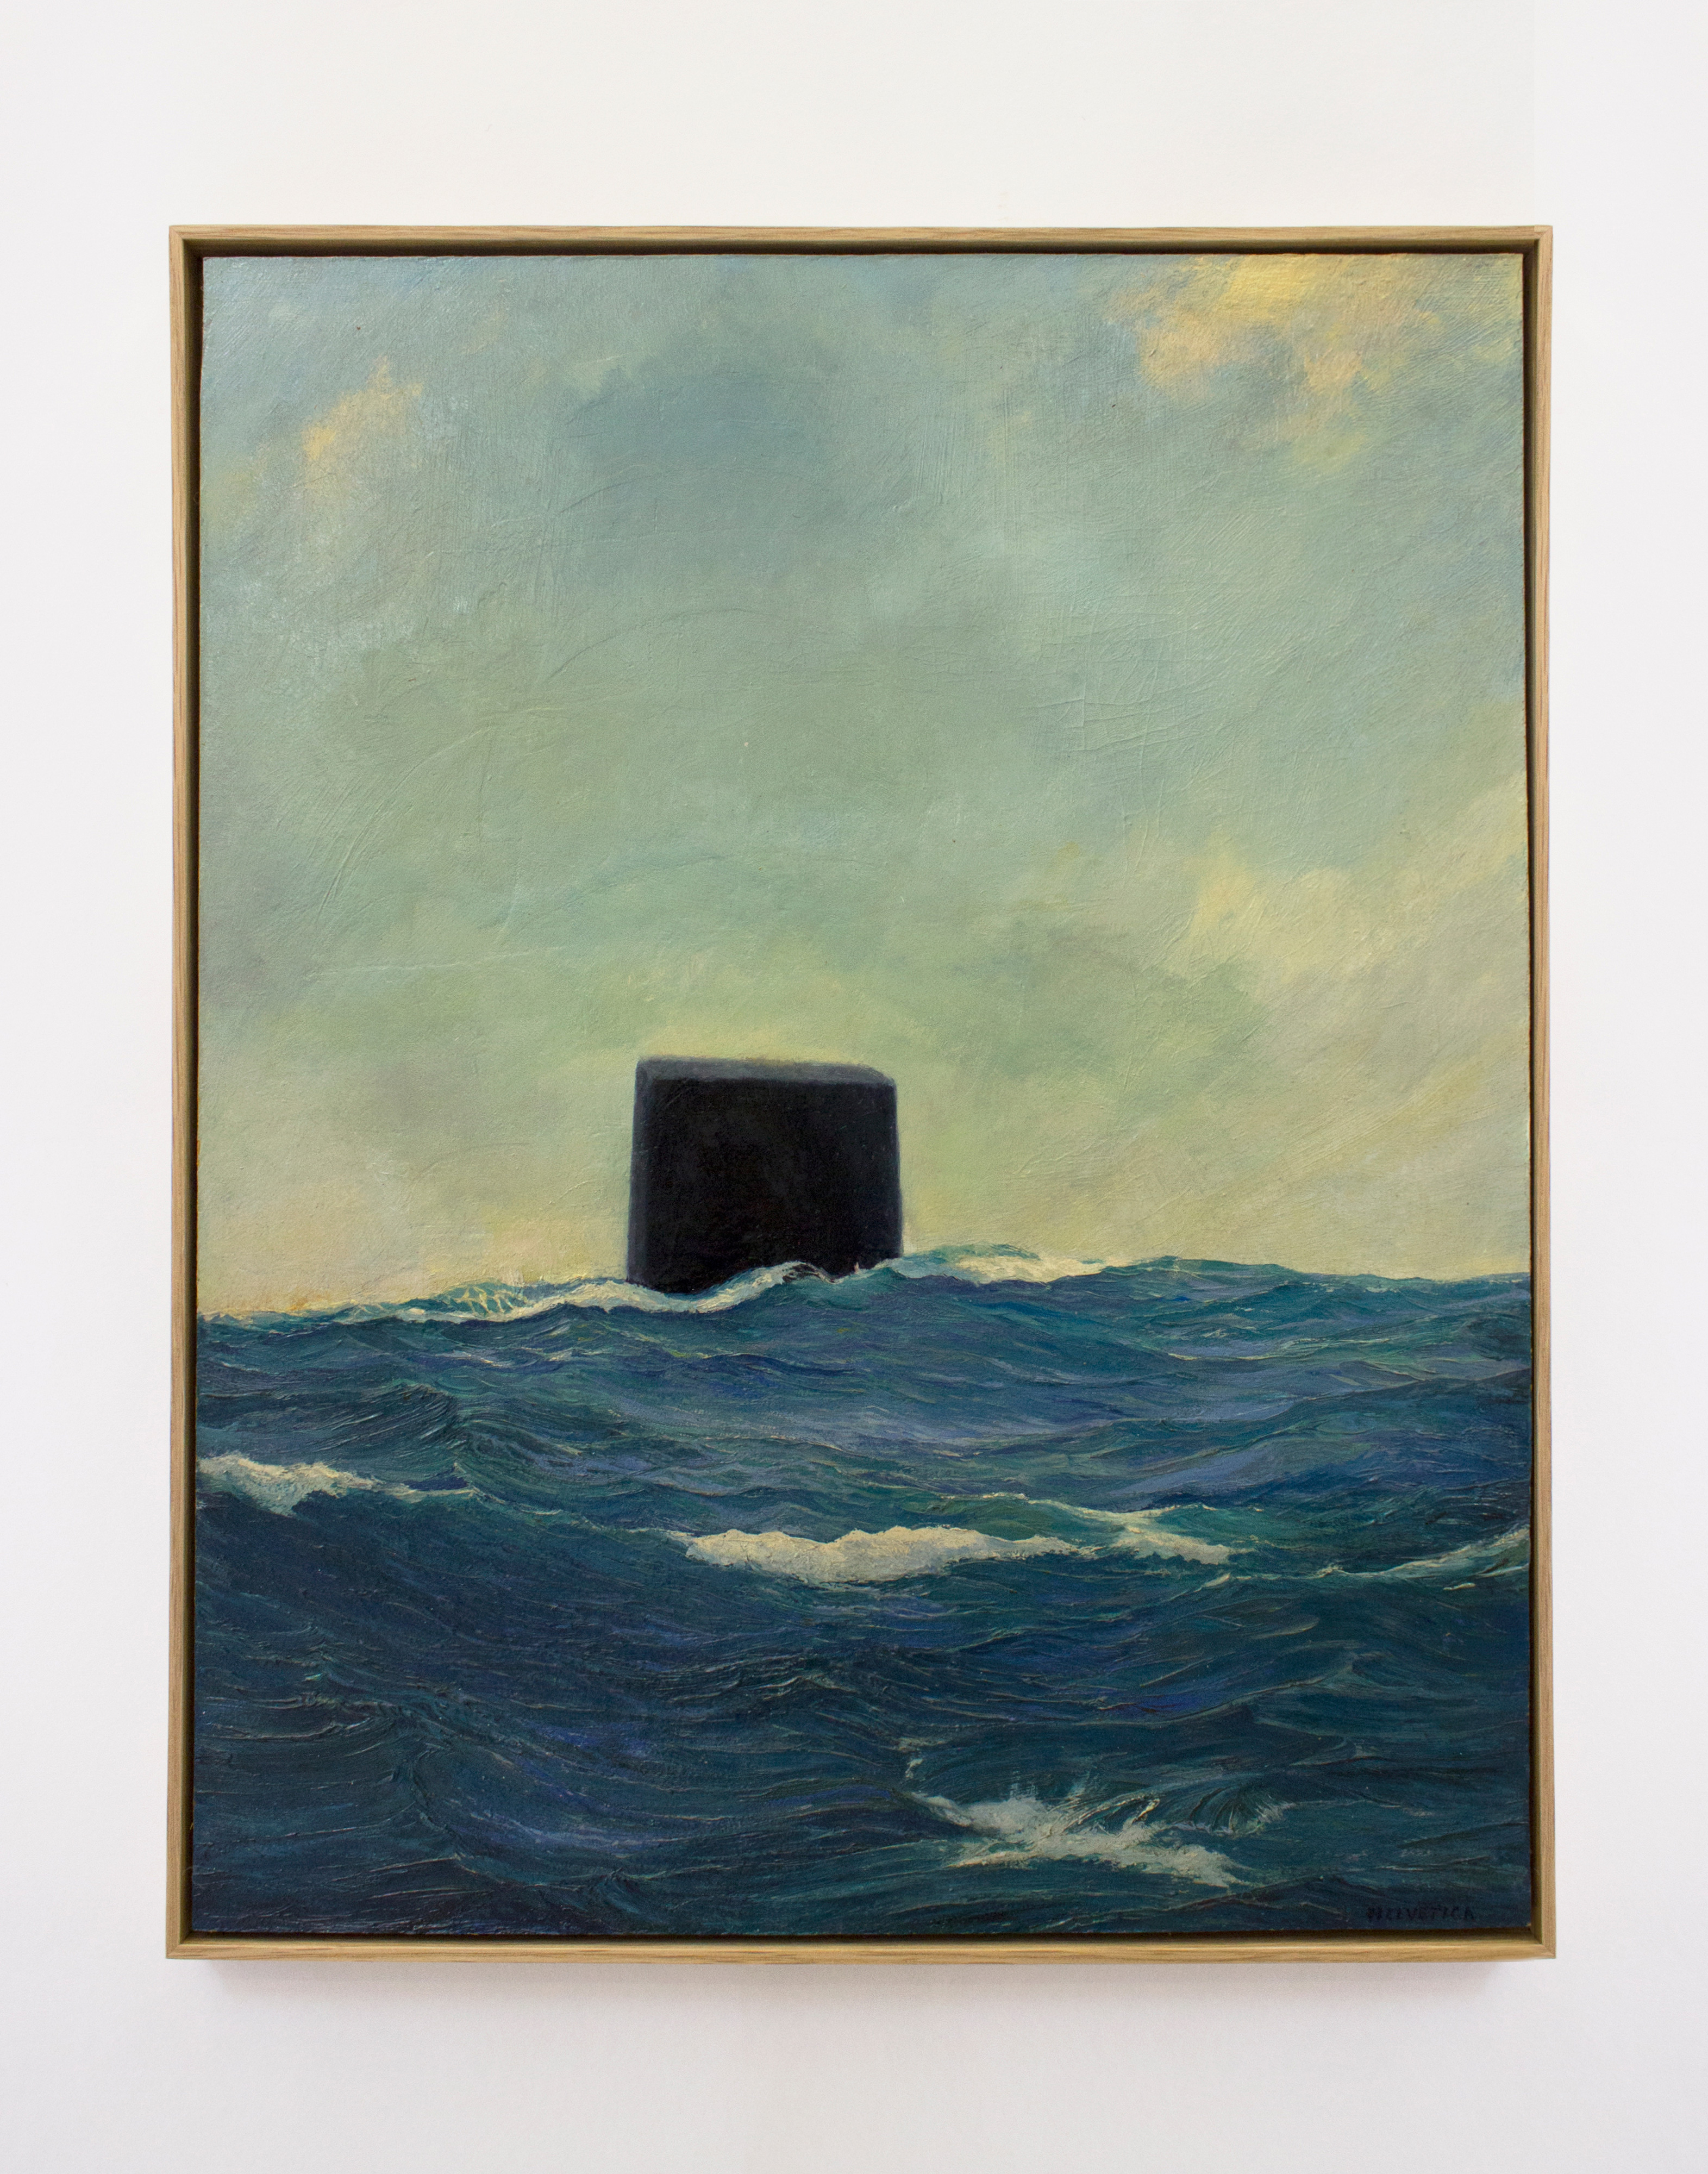 Galerie Barbara Thumm \ Fiona Banner aka The Vanity Press – Full Sea Stop Scape \ Helvetica (2019)